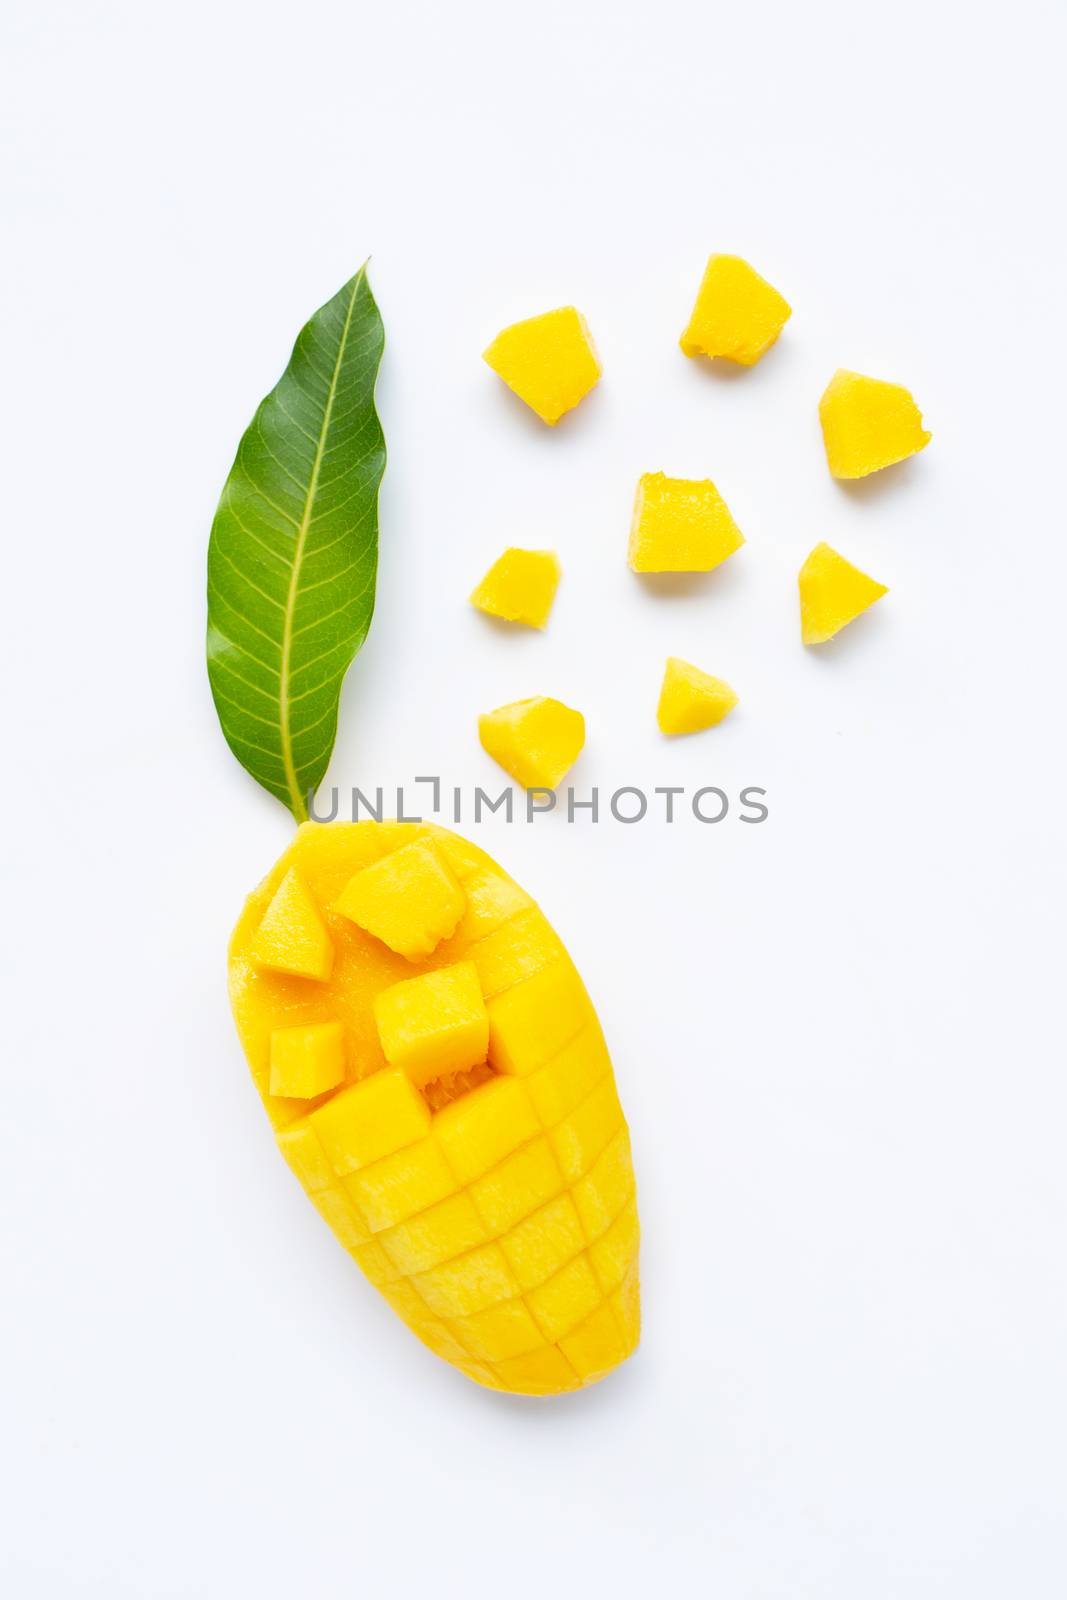 Tropical fruit, Mango  on white background.  by Bowonpat